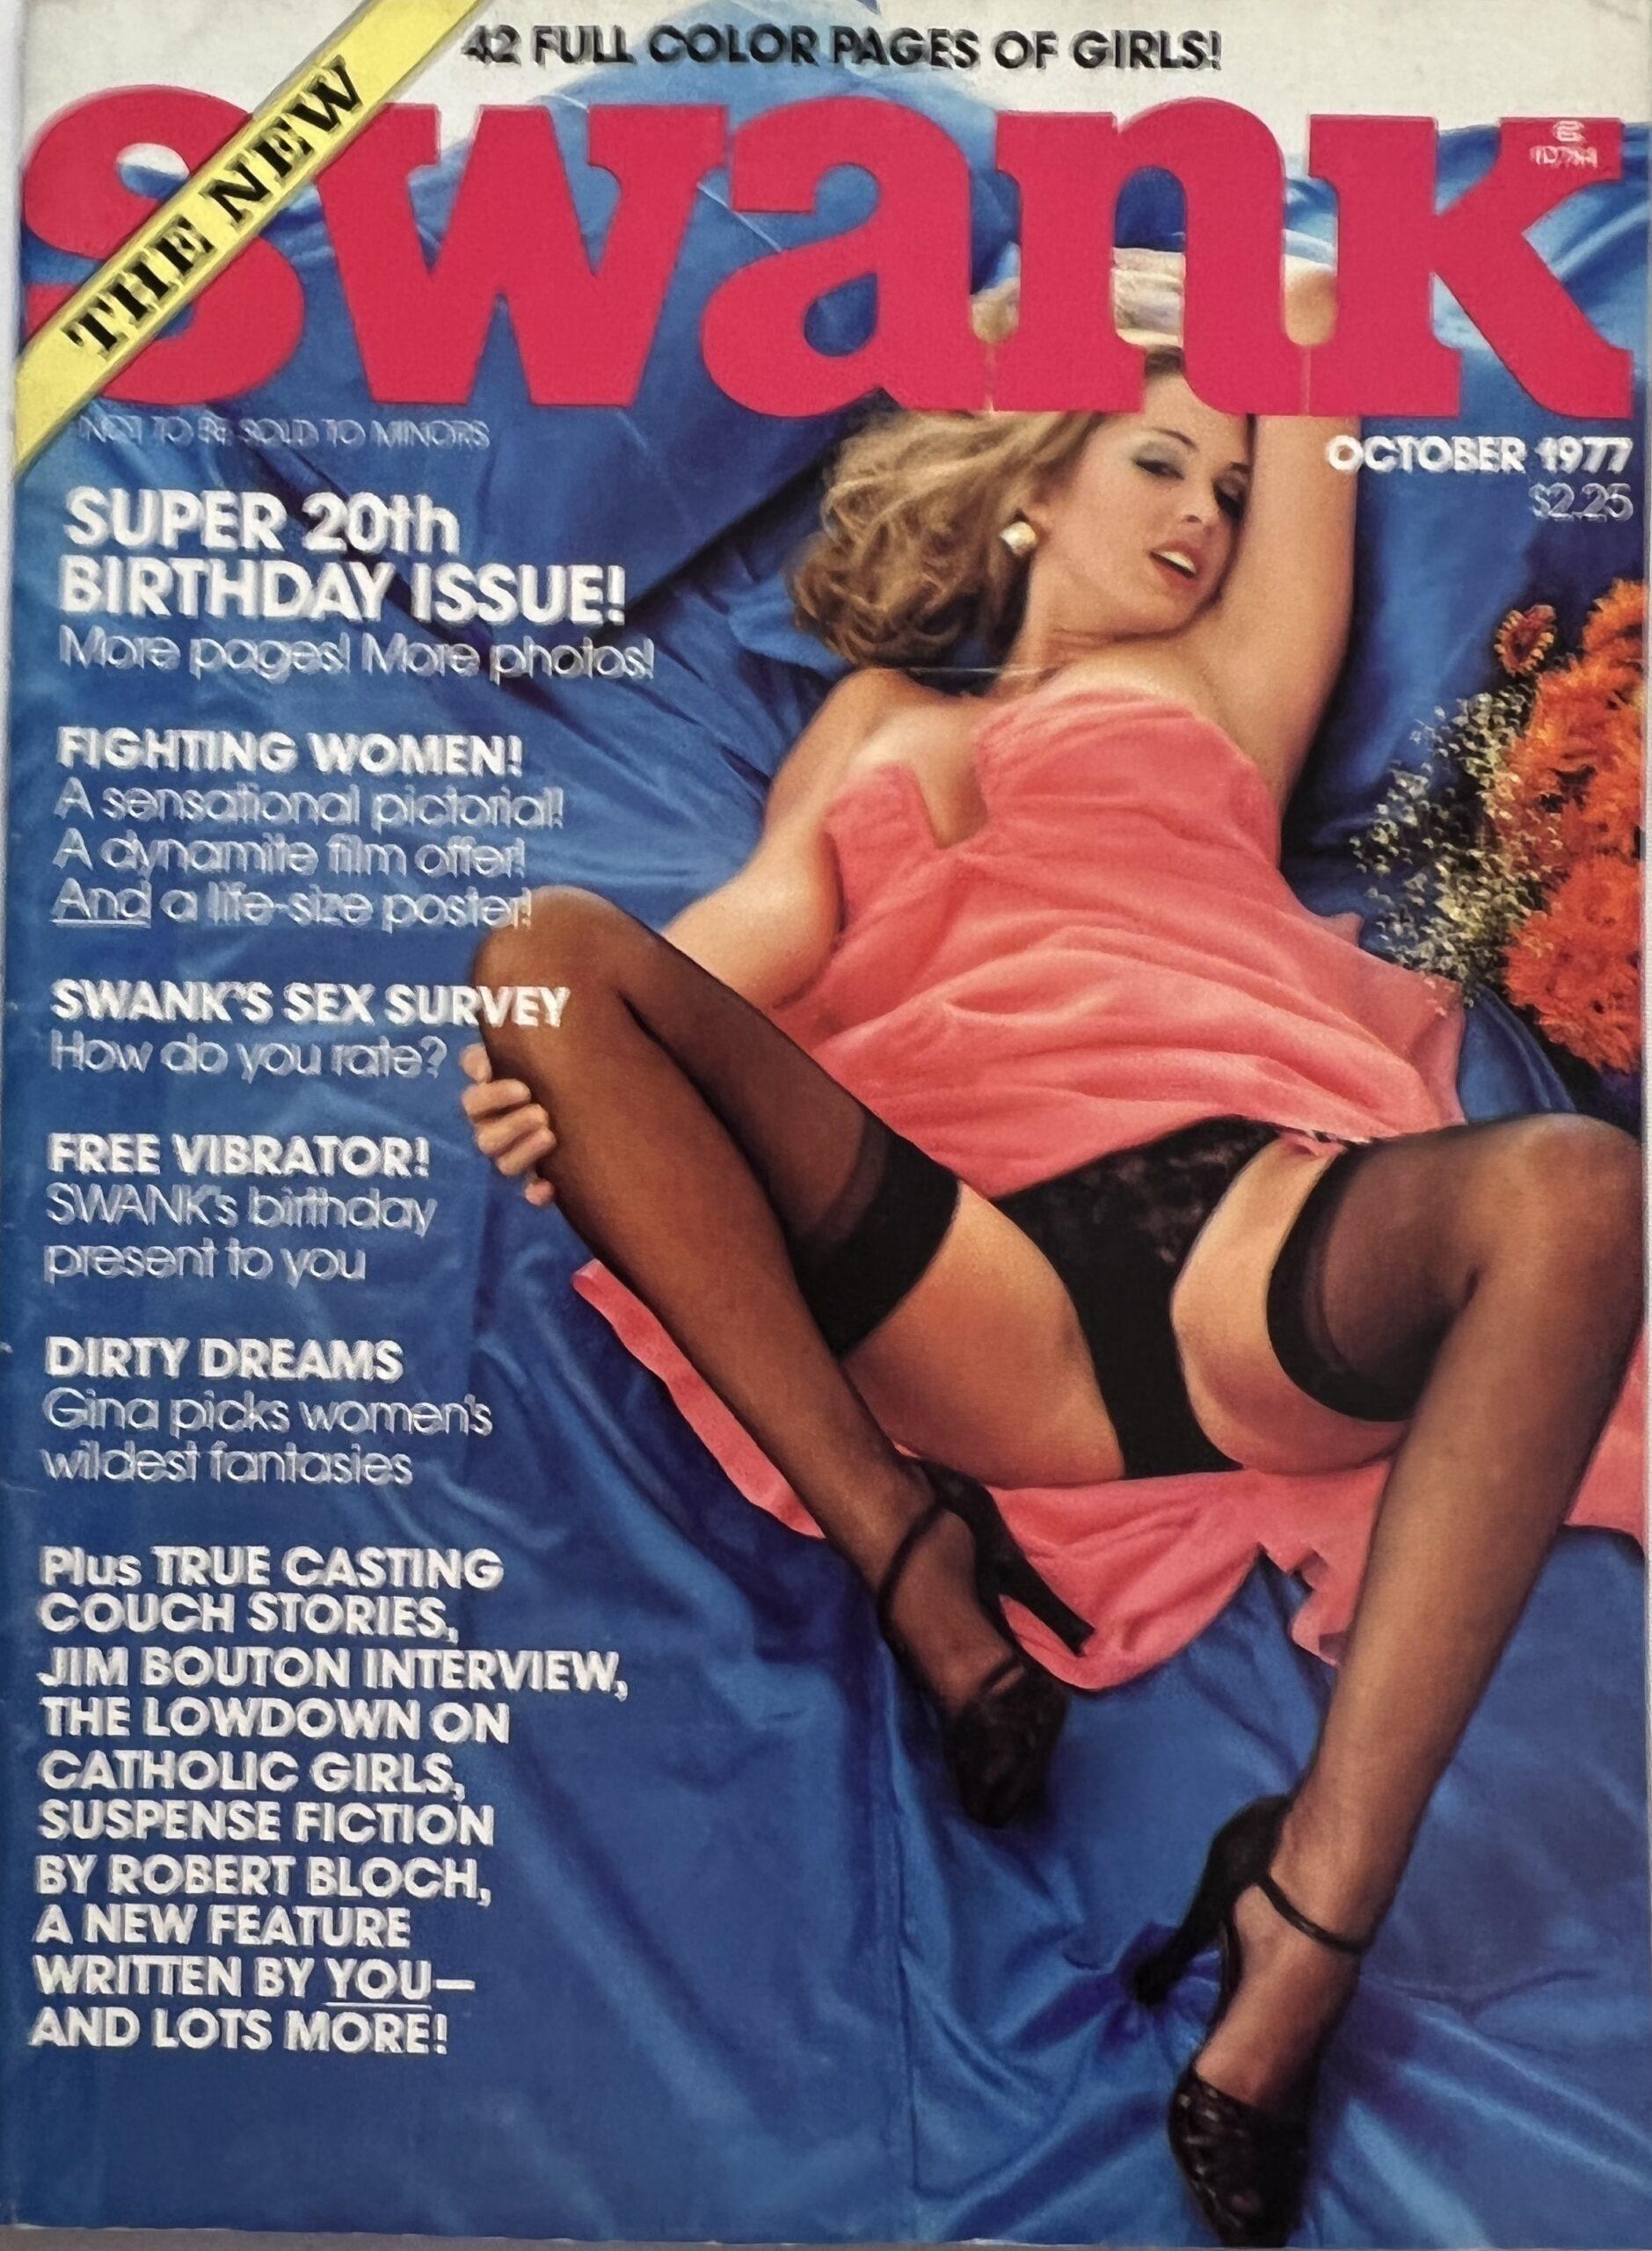 Swank October 1977 Super 20th Birthday Issue